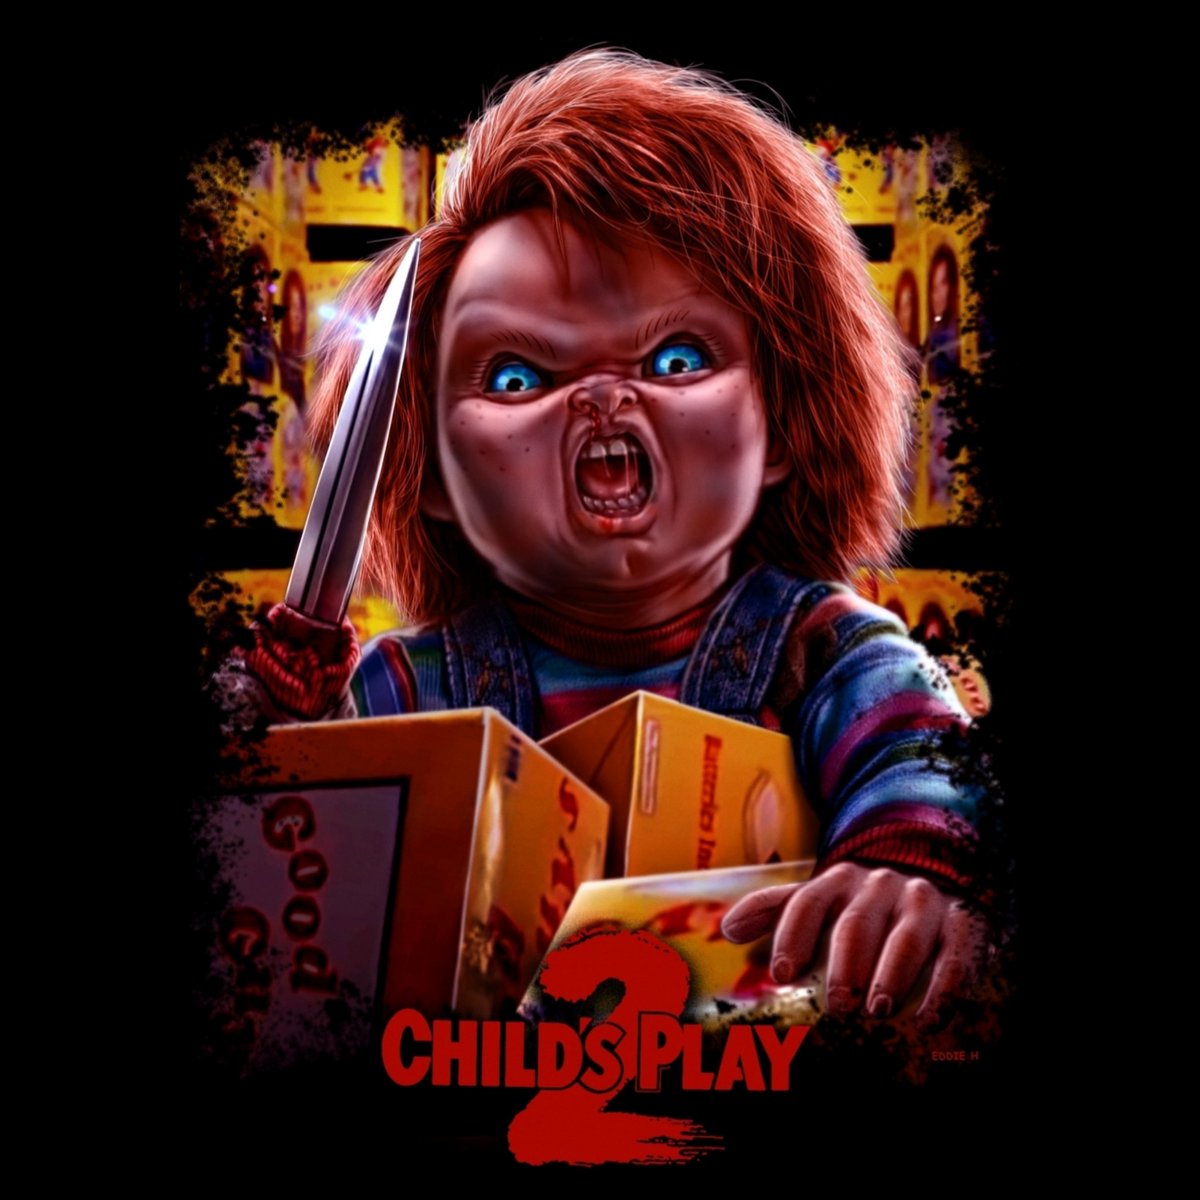 Happy 30th Anniversary Chucky 2 :)
Childs Play 2 was released 30 years ago. 'Sorry Jack! Chucky's Back!'
#30thanniversary #childsplay #childsplay2 #chucky #angrychucky #donmancini #eddieholly #eddieh #goodguydoll #horror #horrormovies #scary #90s #doll #fanart #digitalpainting